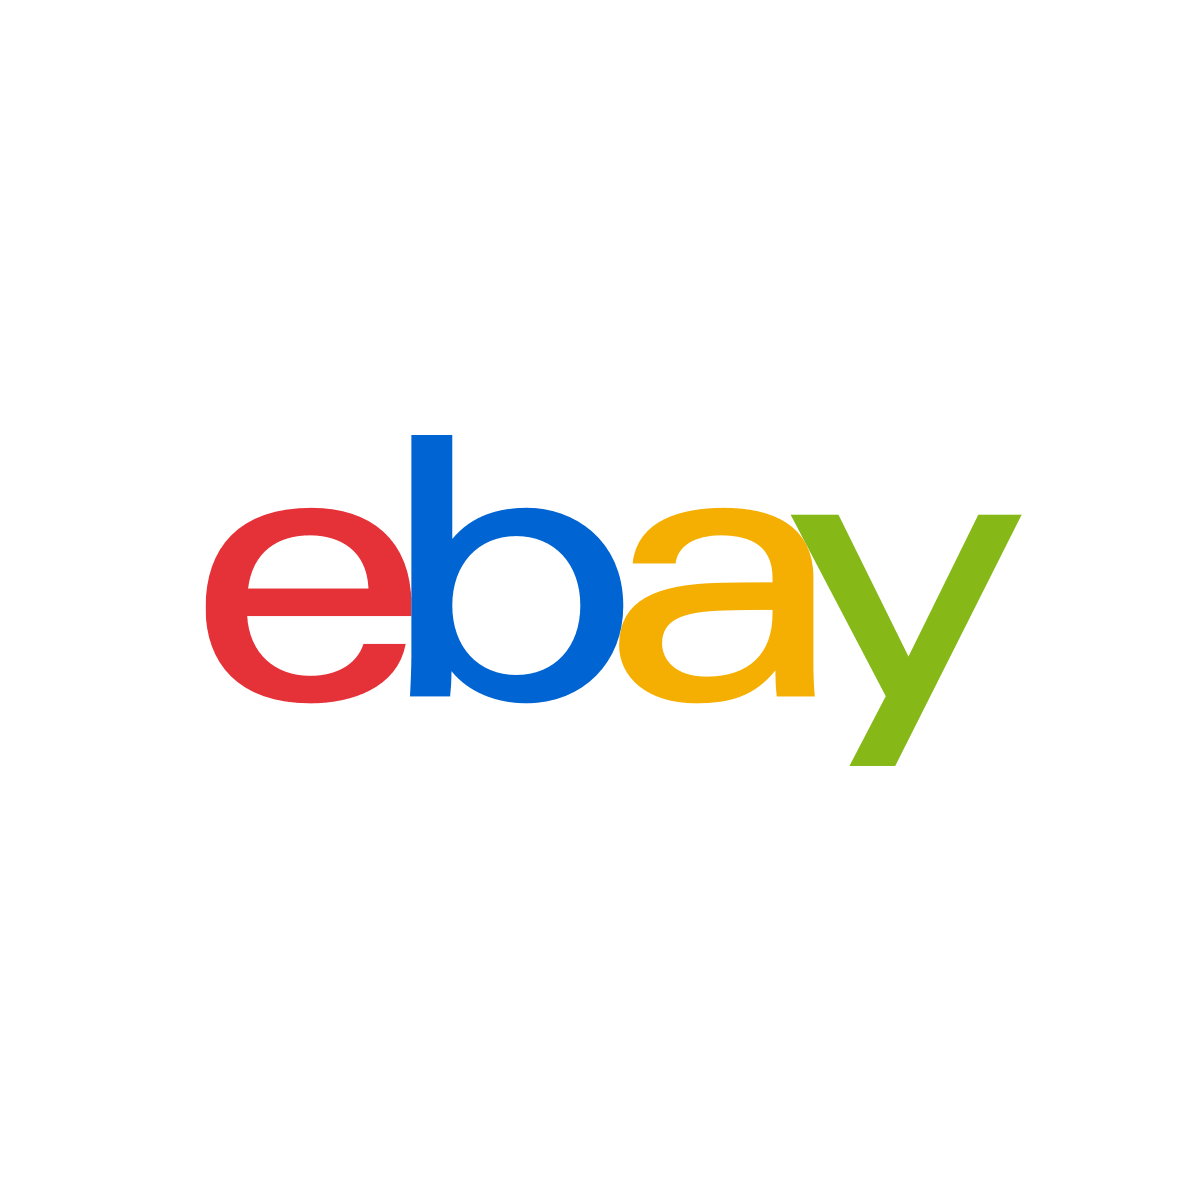 eBay Canada